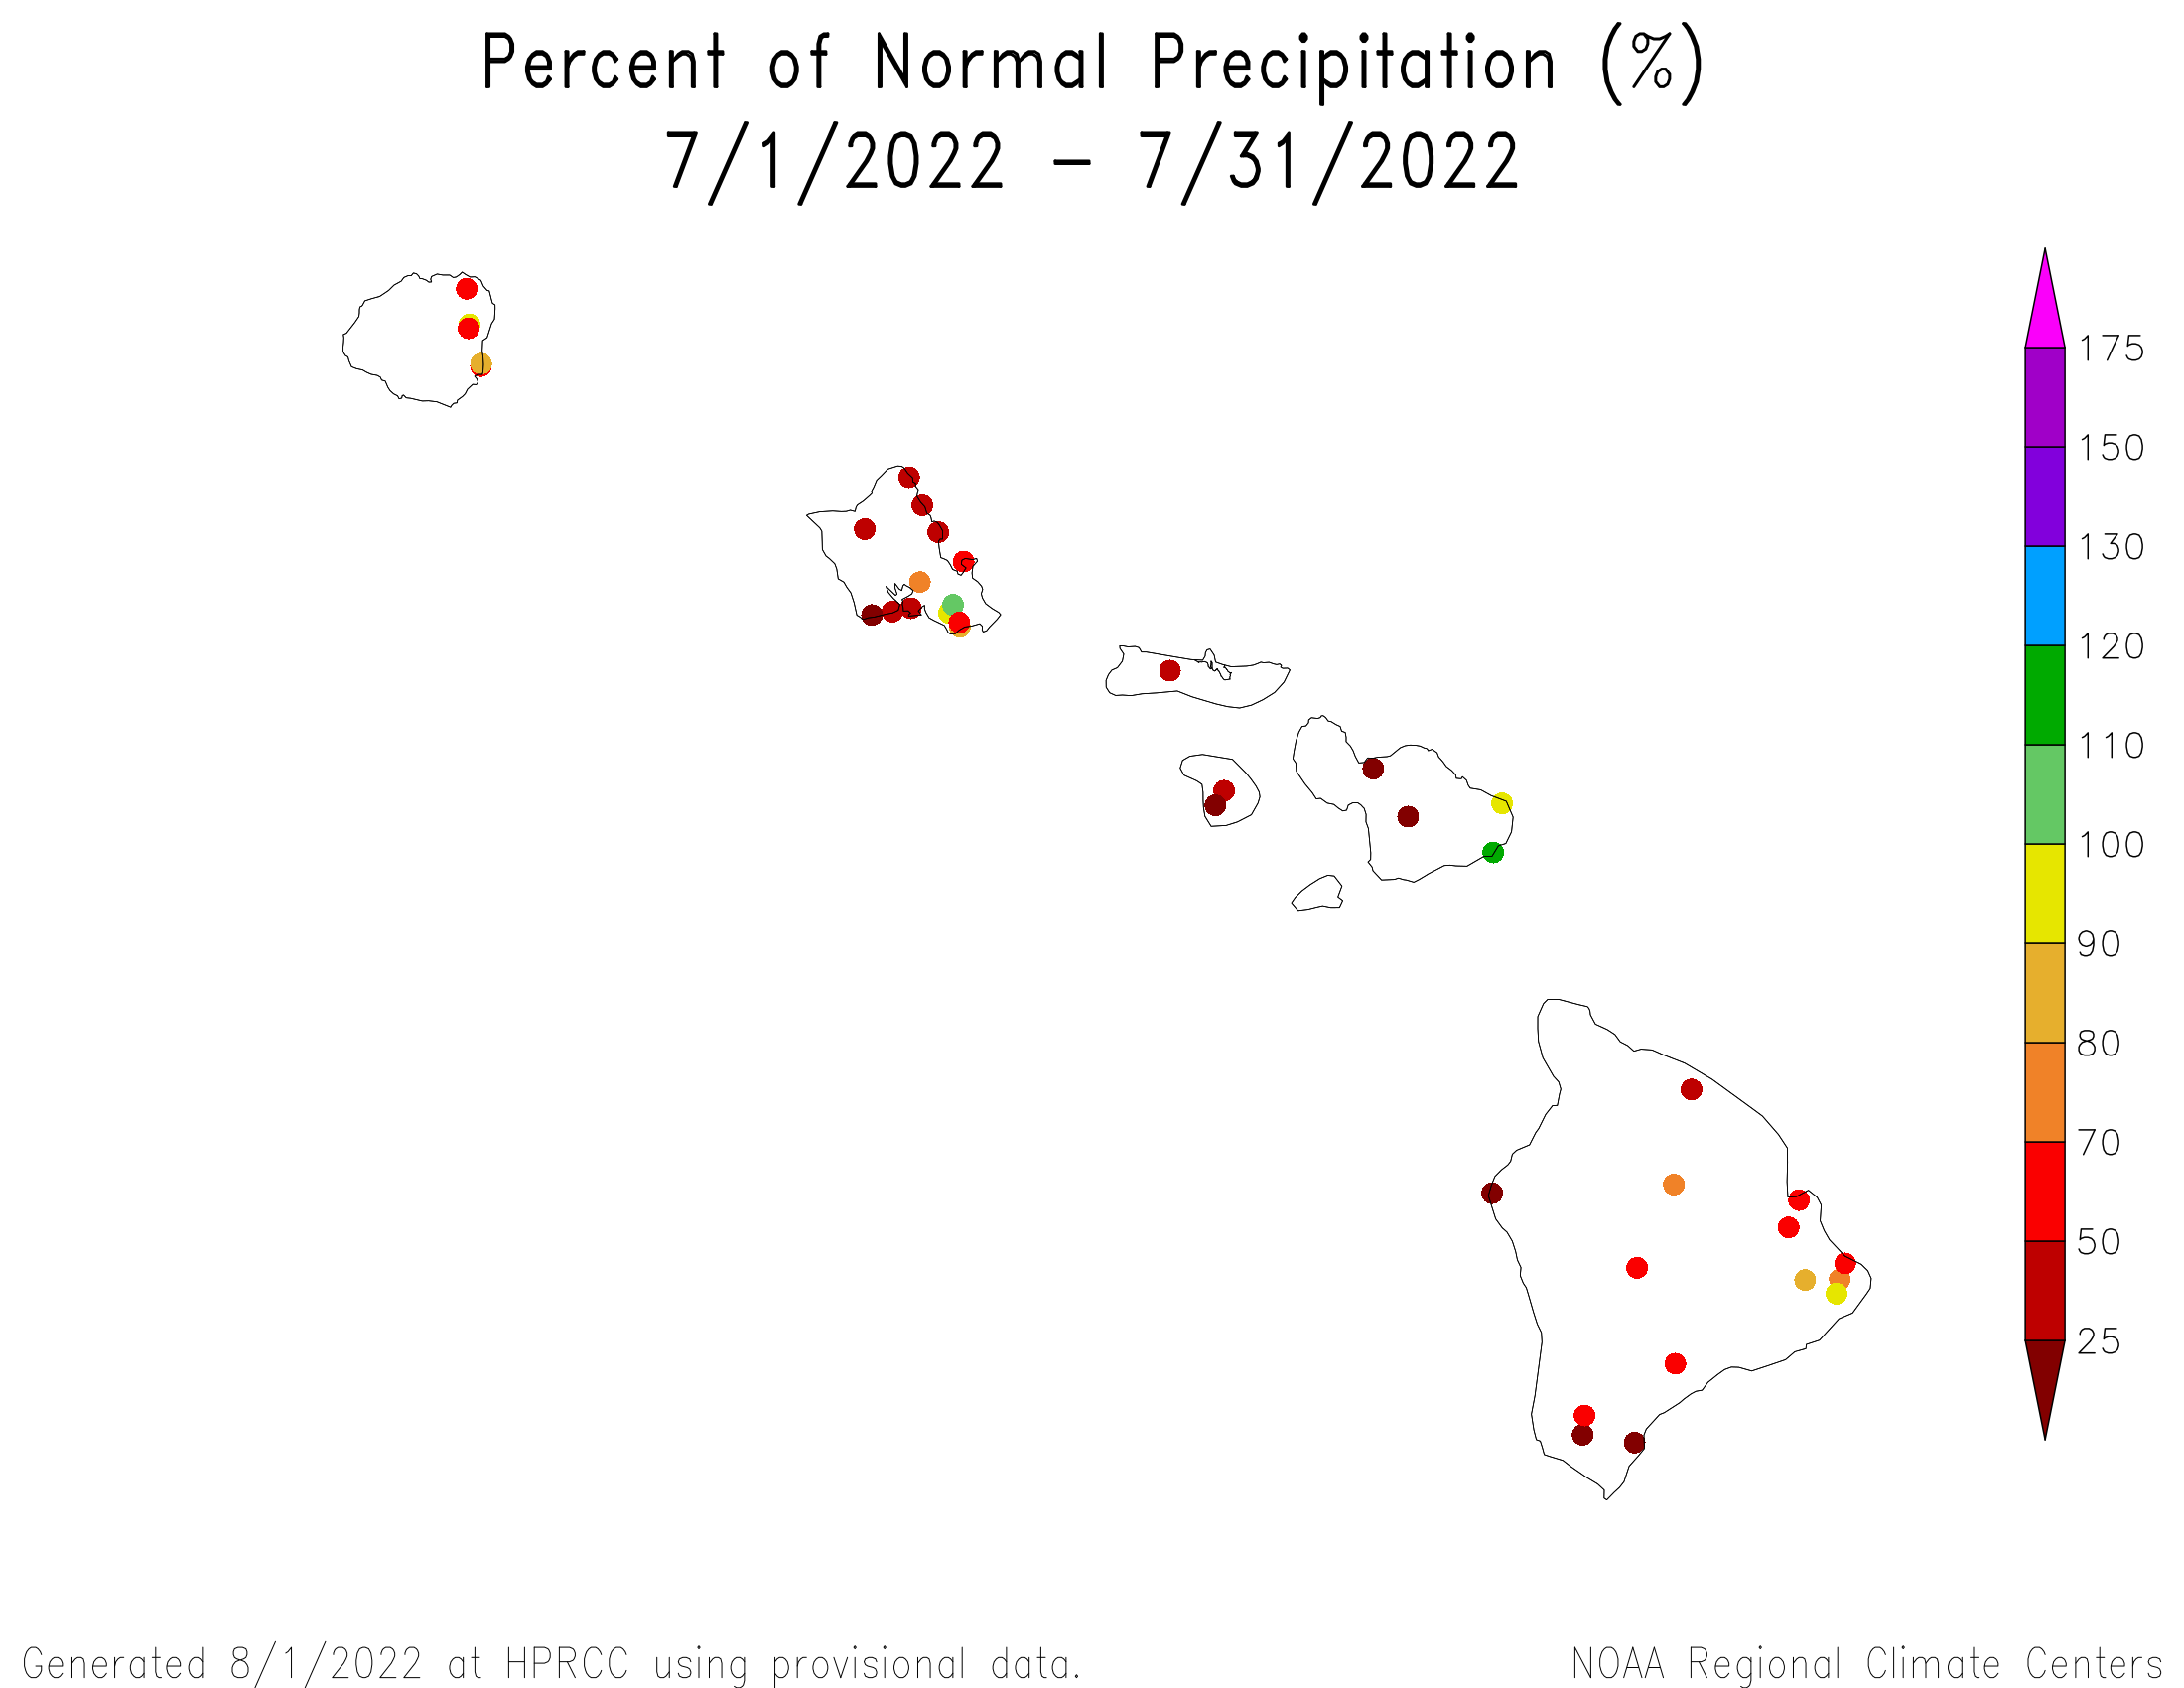 Hawaii Percent of Normal Precipitation, July 2022